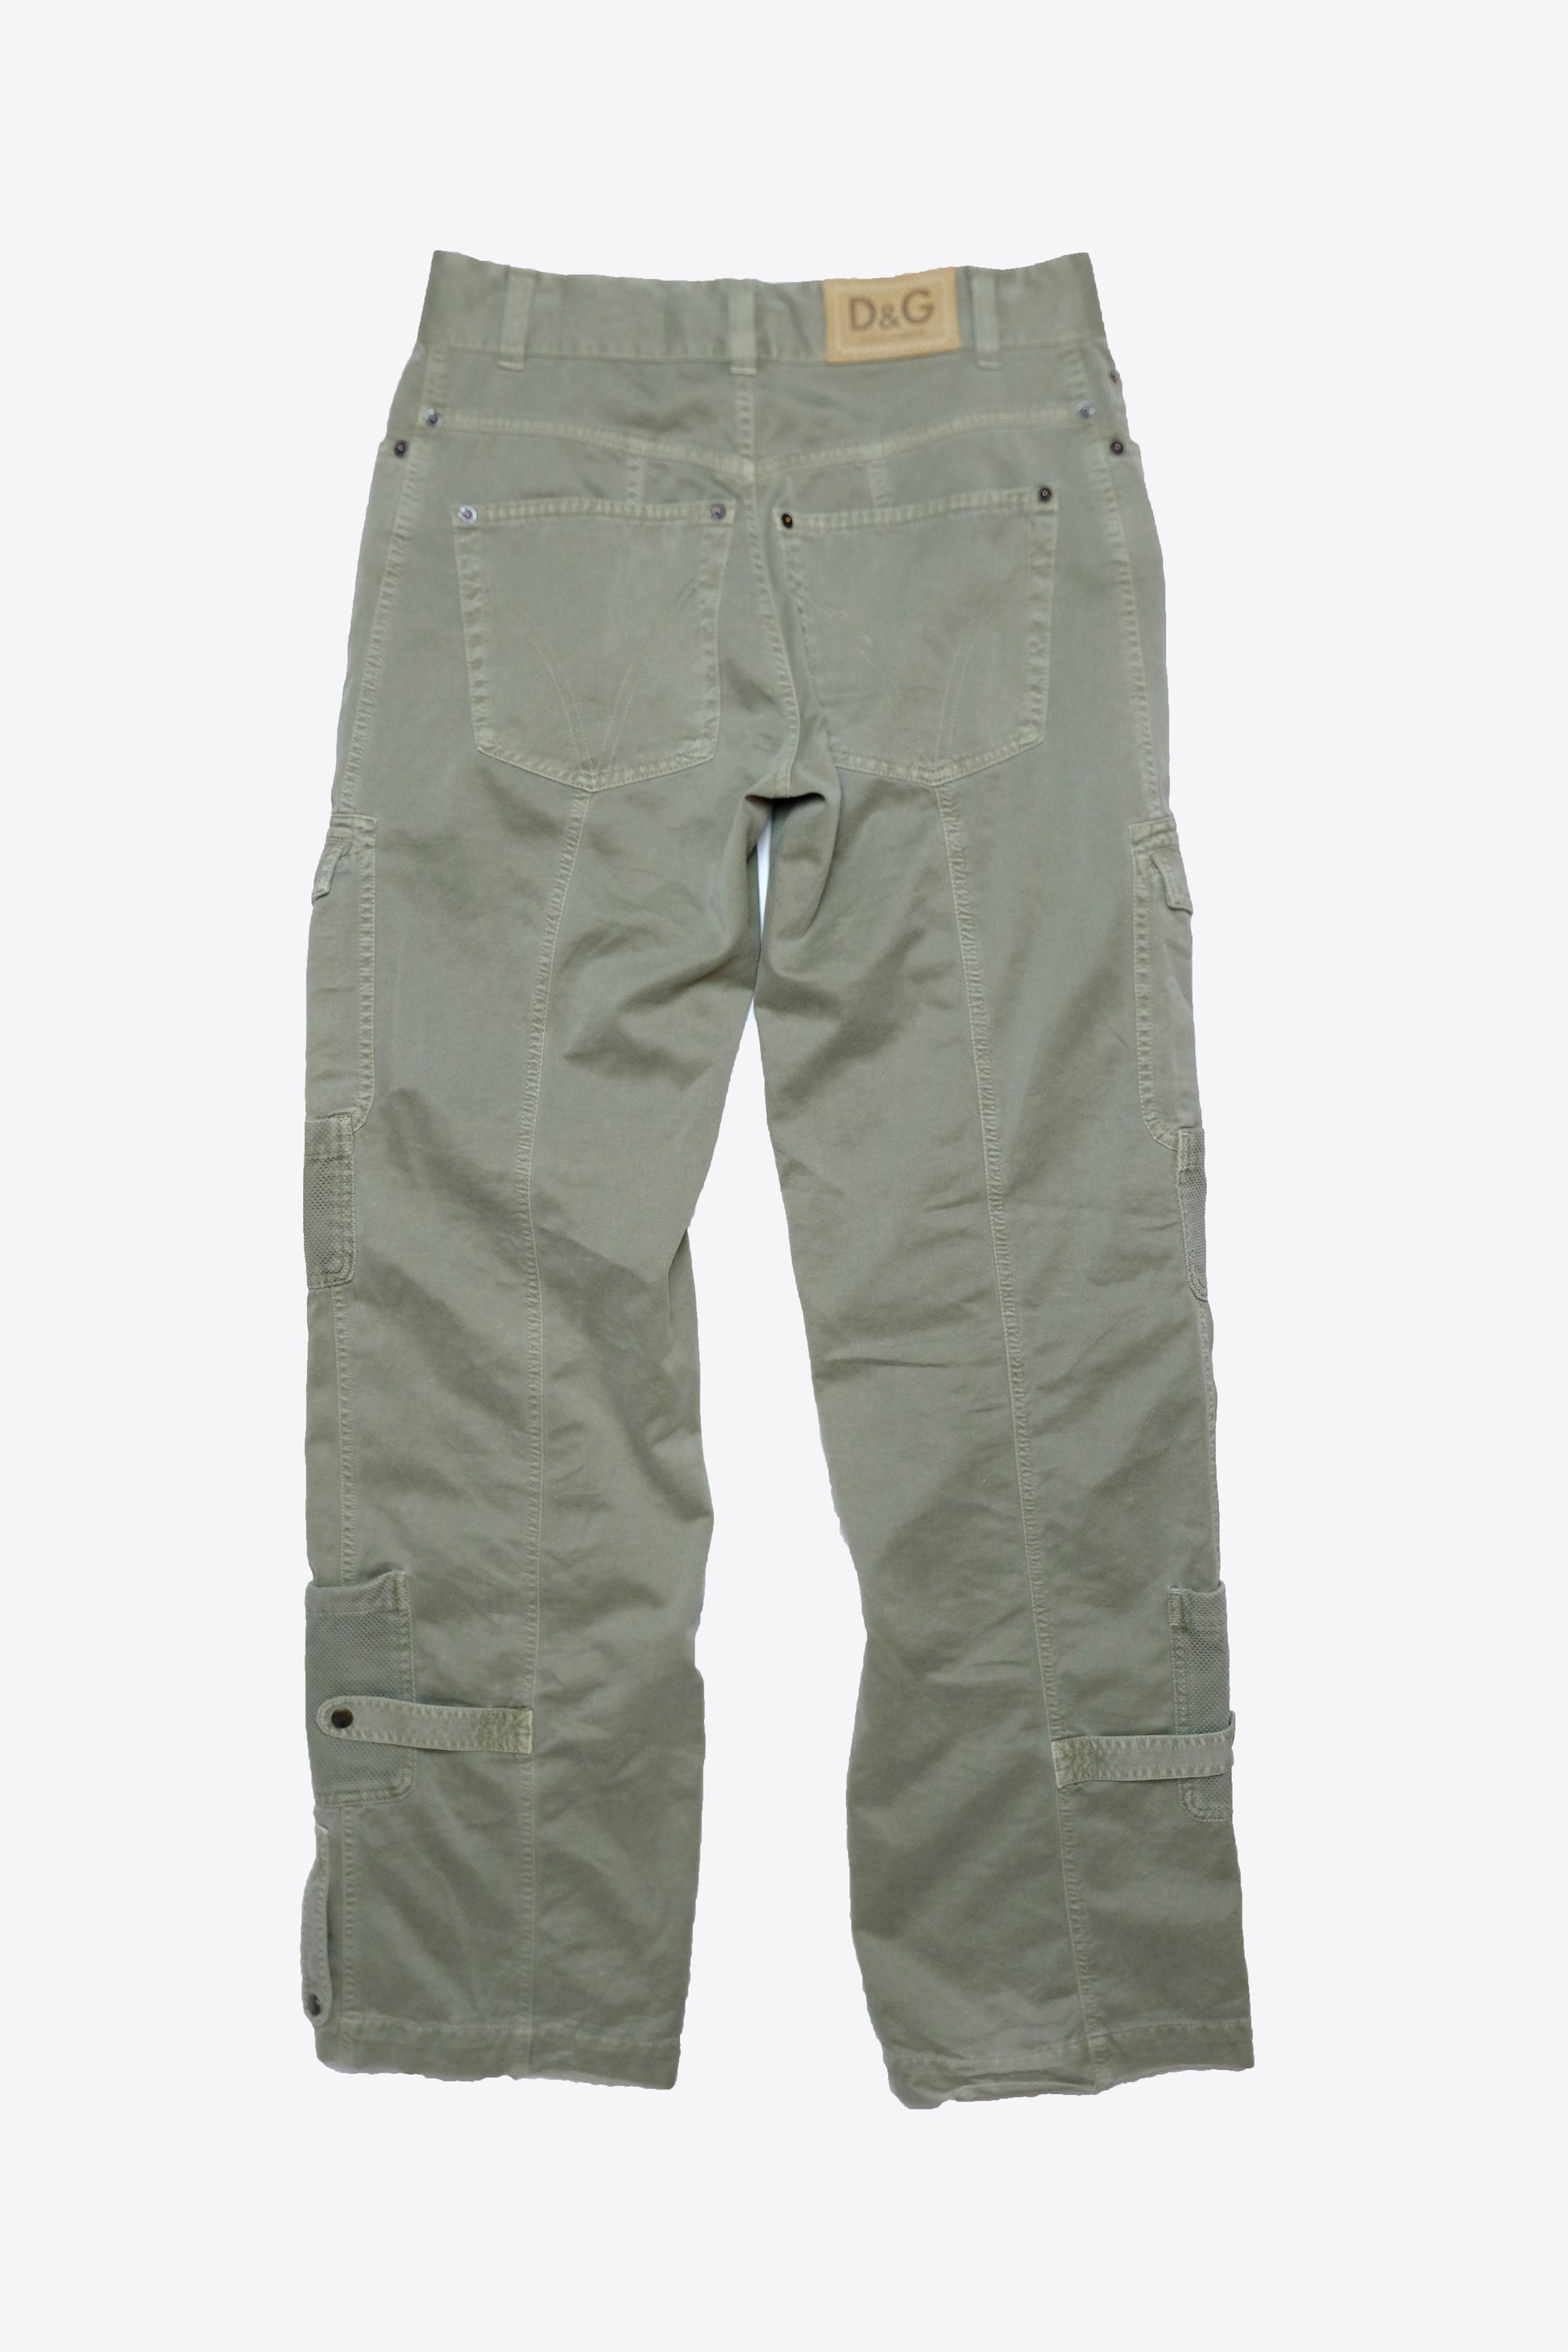 Dolce & Gabbana - SS03 Japan Exclusive Zipper Cargo Pants, Size 31 